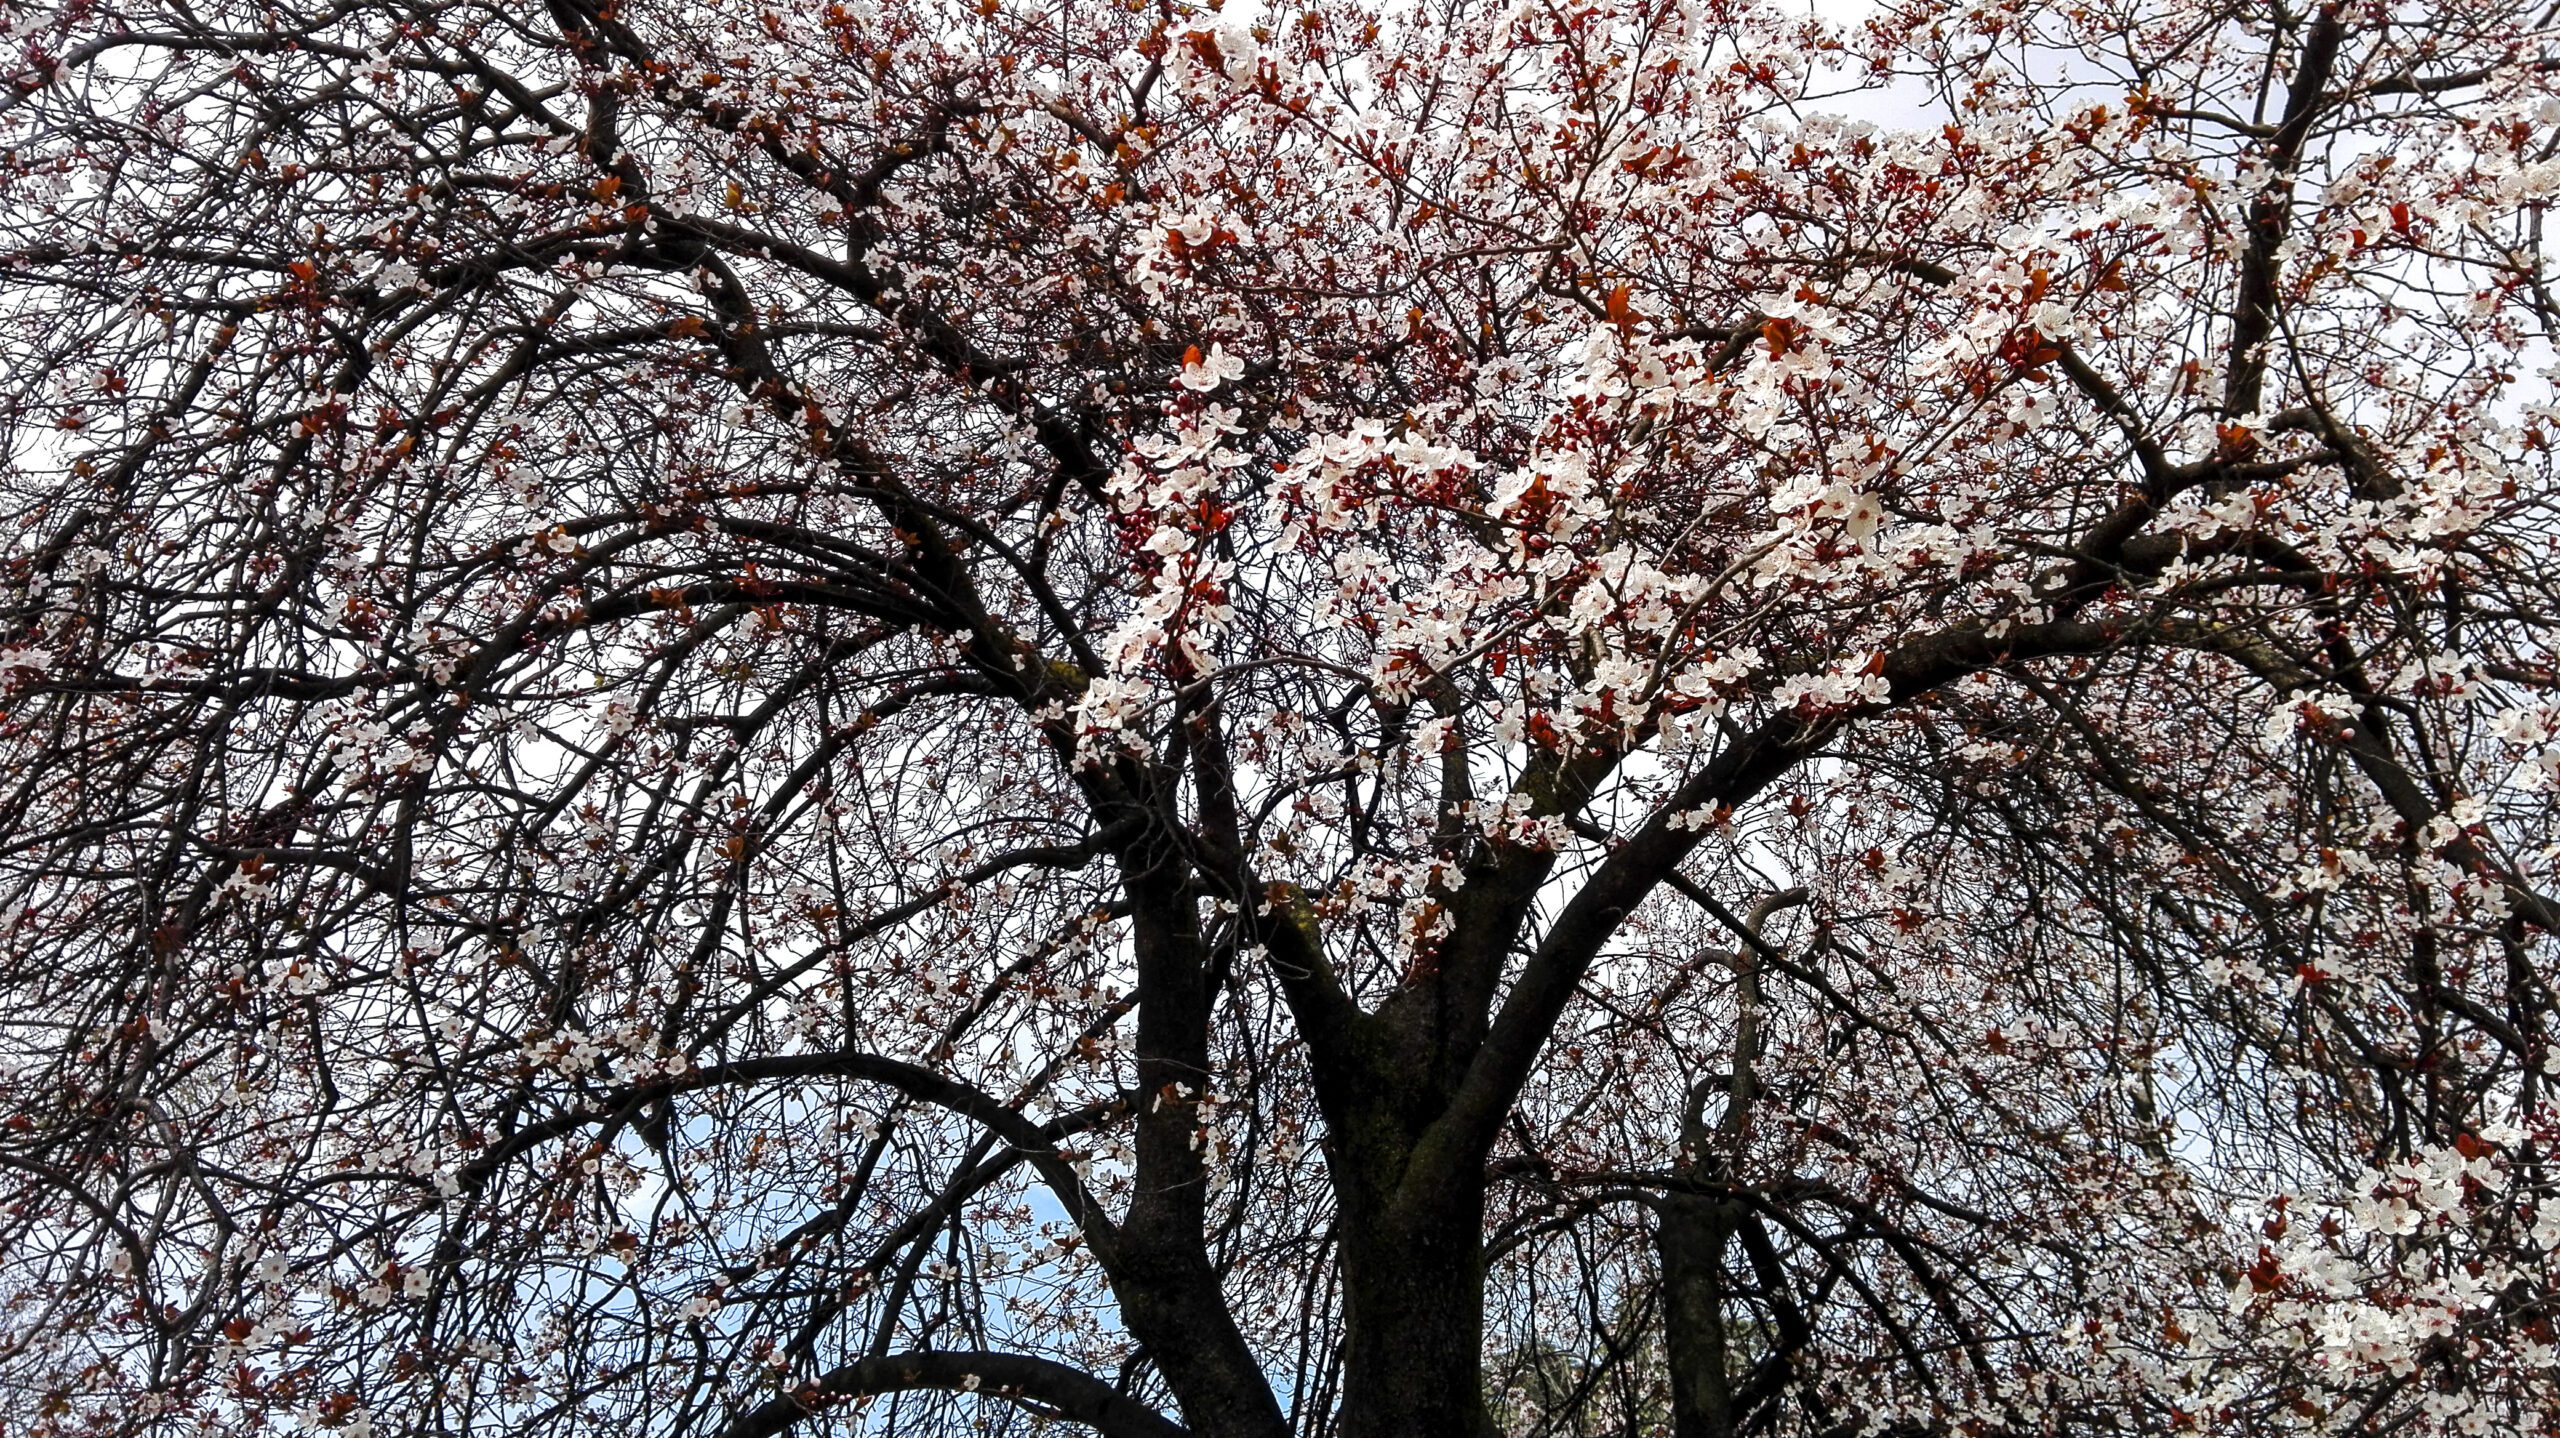 Prunus cerasifera pissardii mature tree canopy with blossom